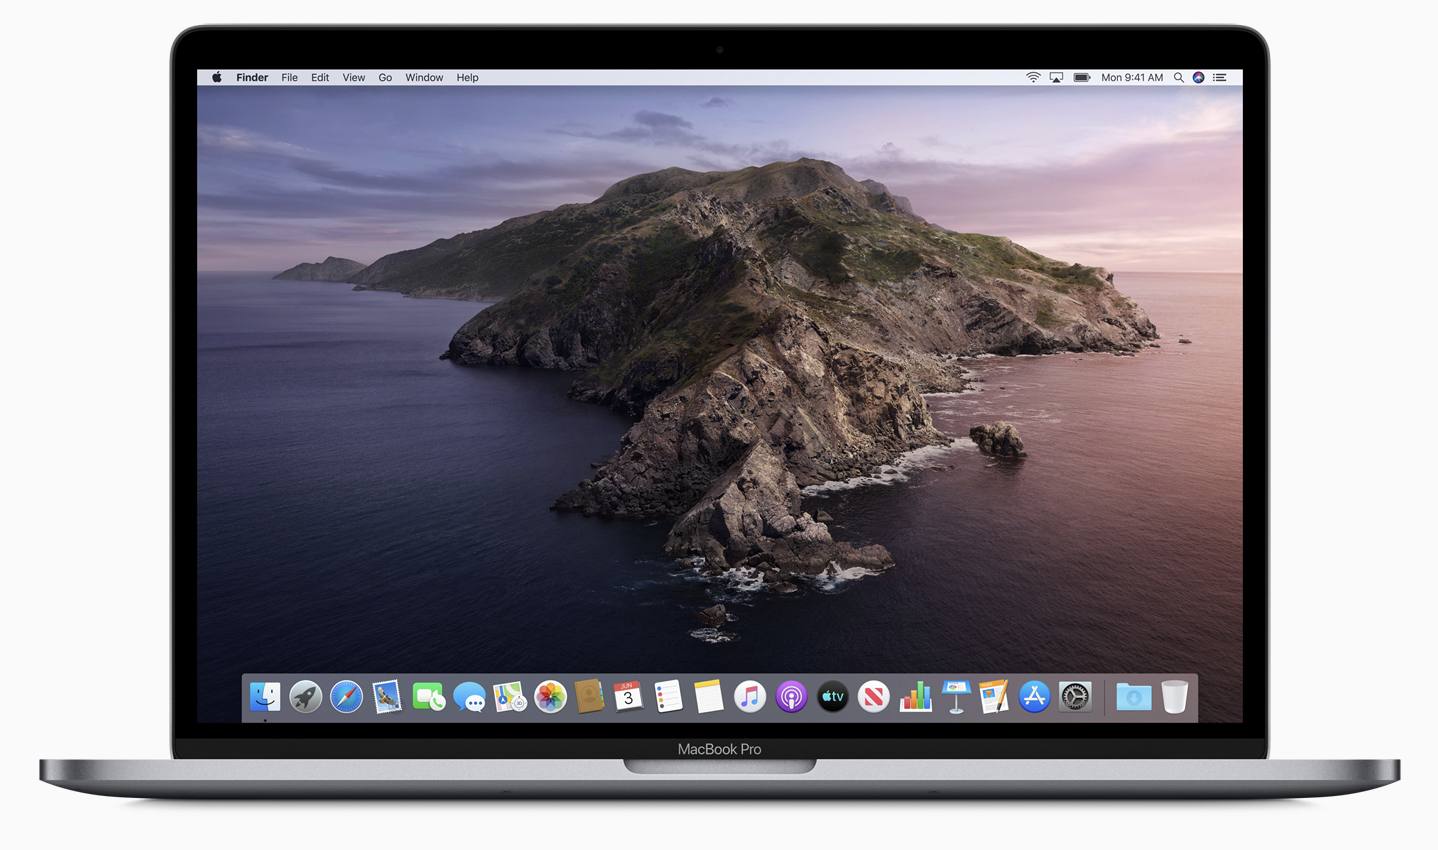 Apple posts sixth developer beta of macOS 10.5